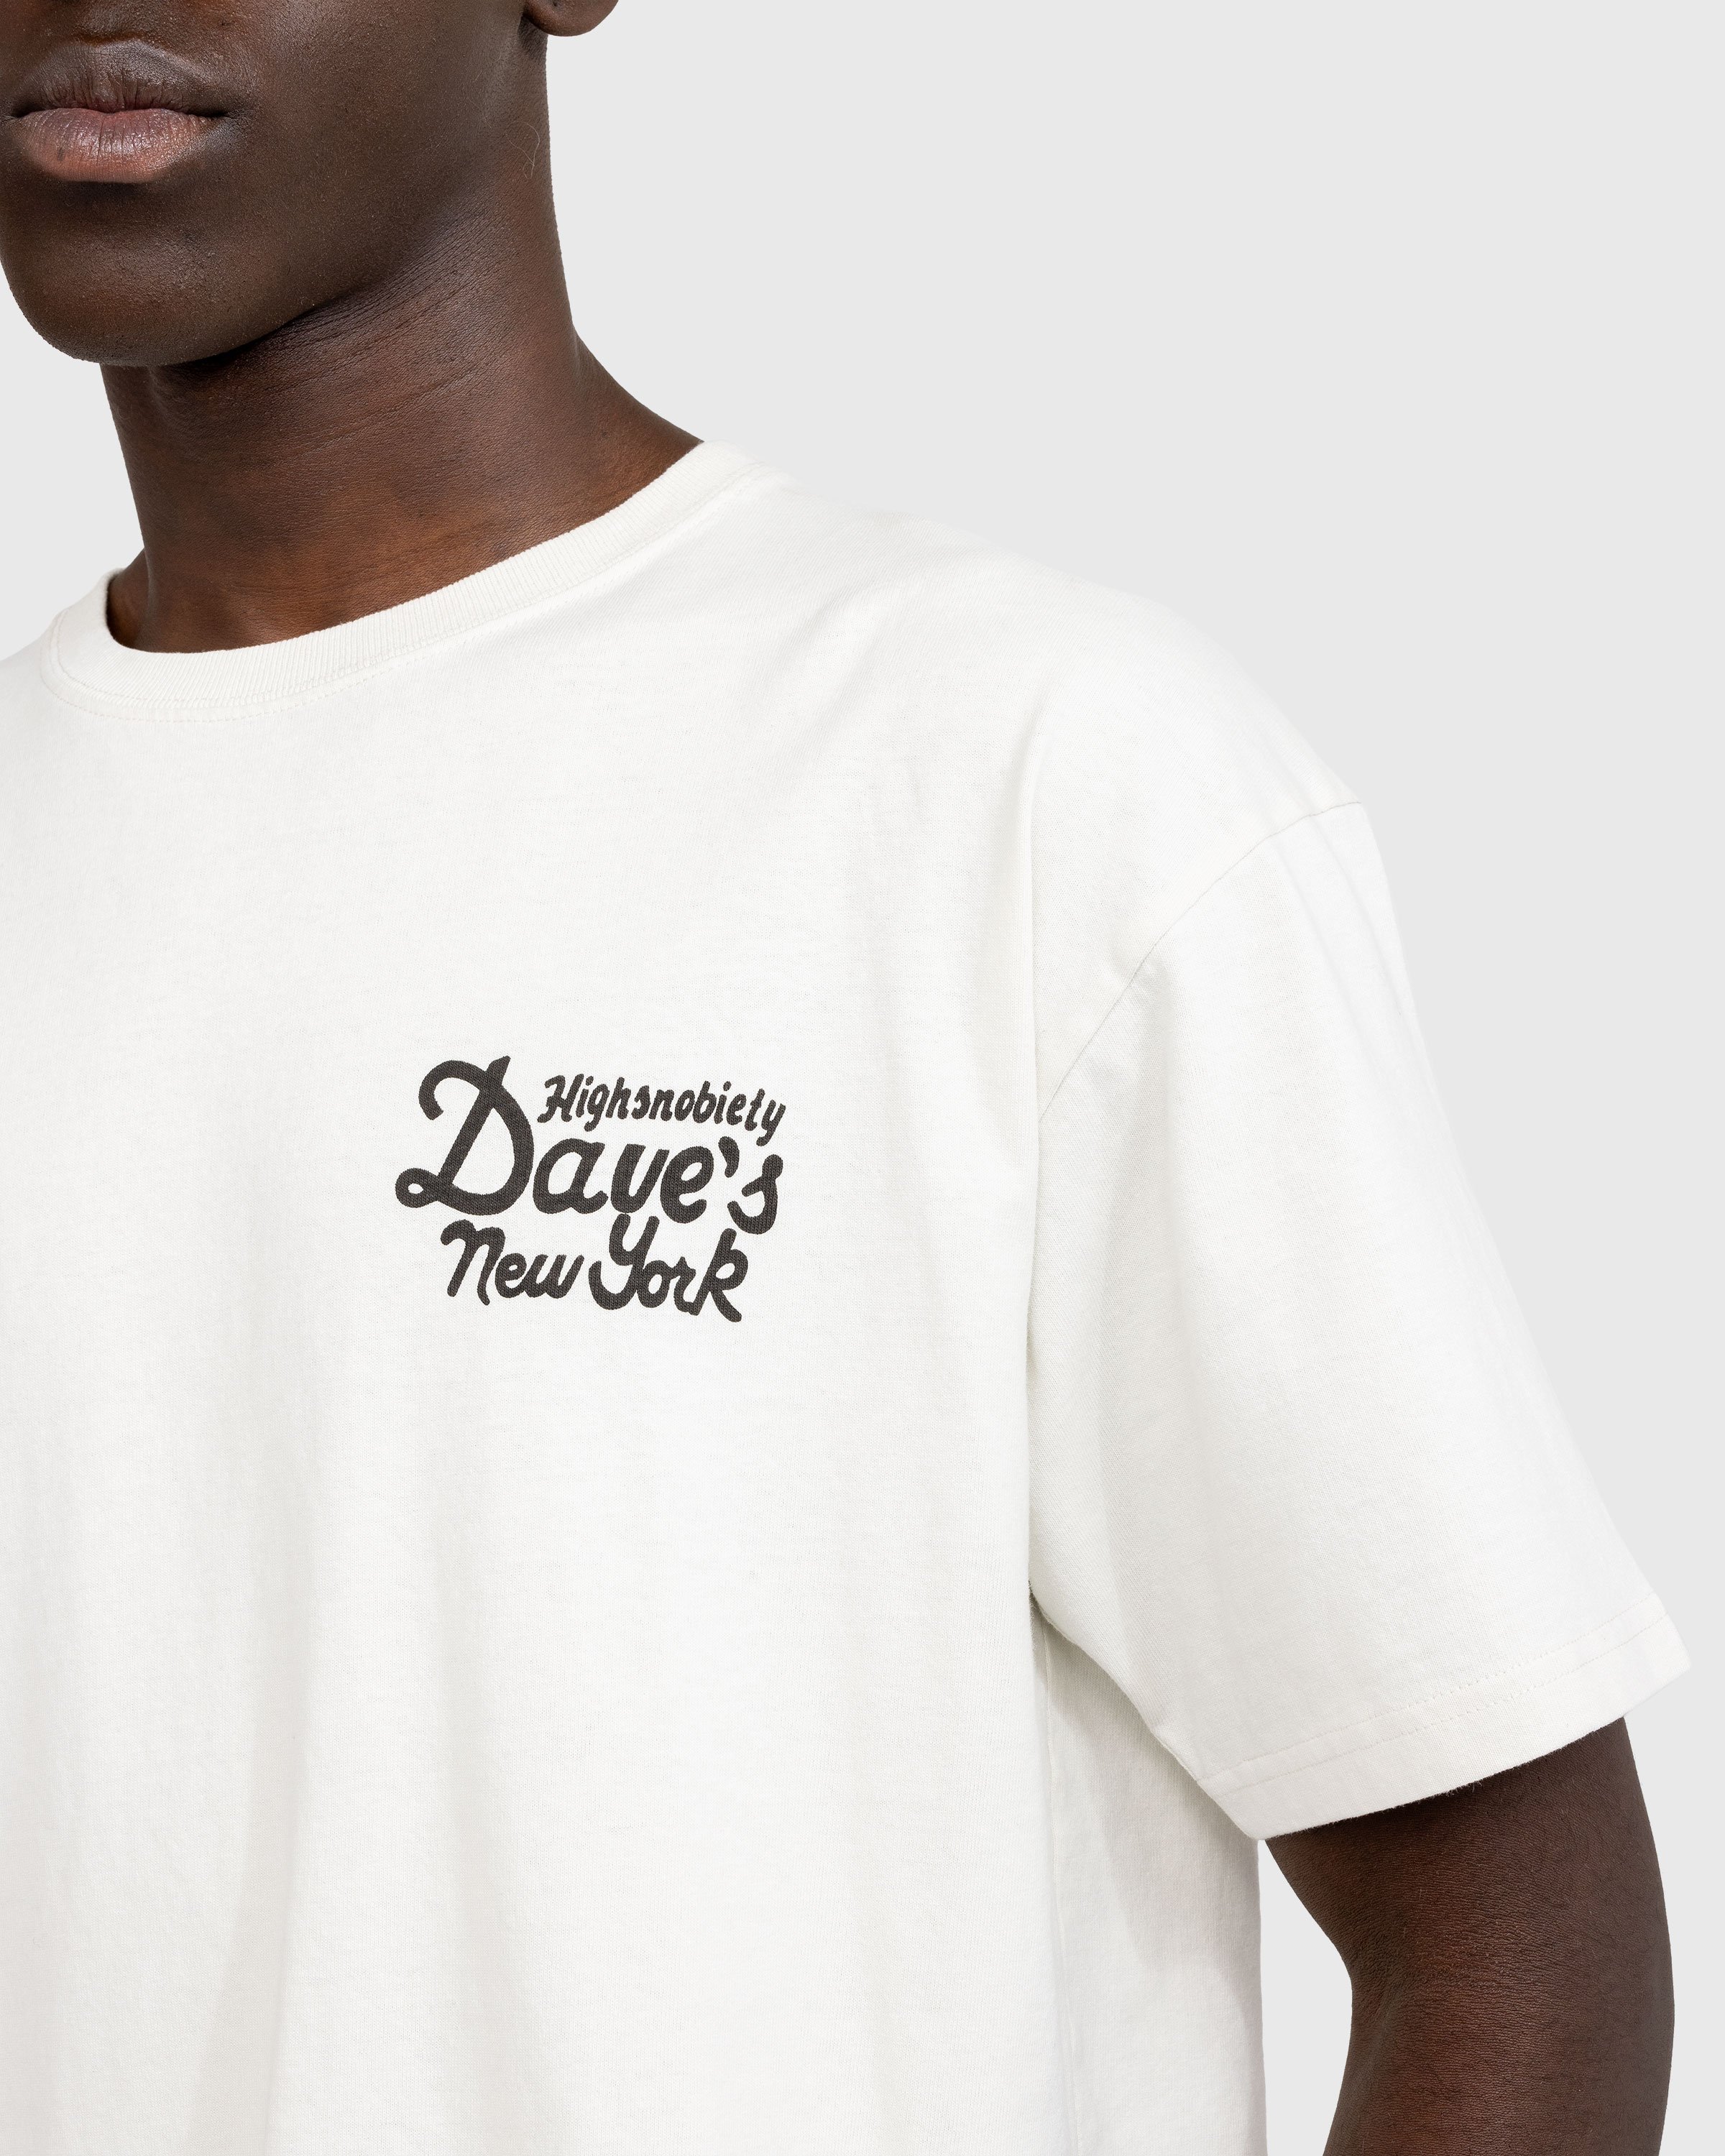 Dave's New York x Highsnobiety - Eggshell T-Shirt - Clothing - Beige - Image 5